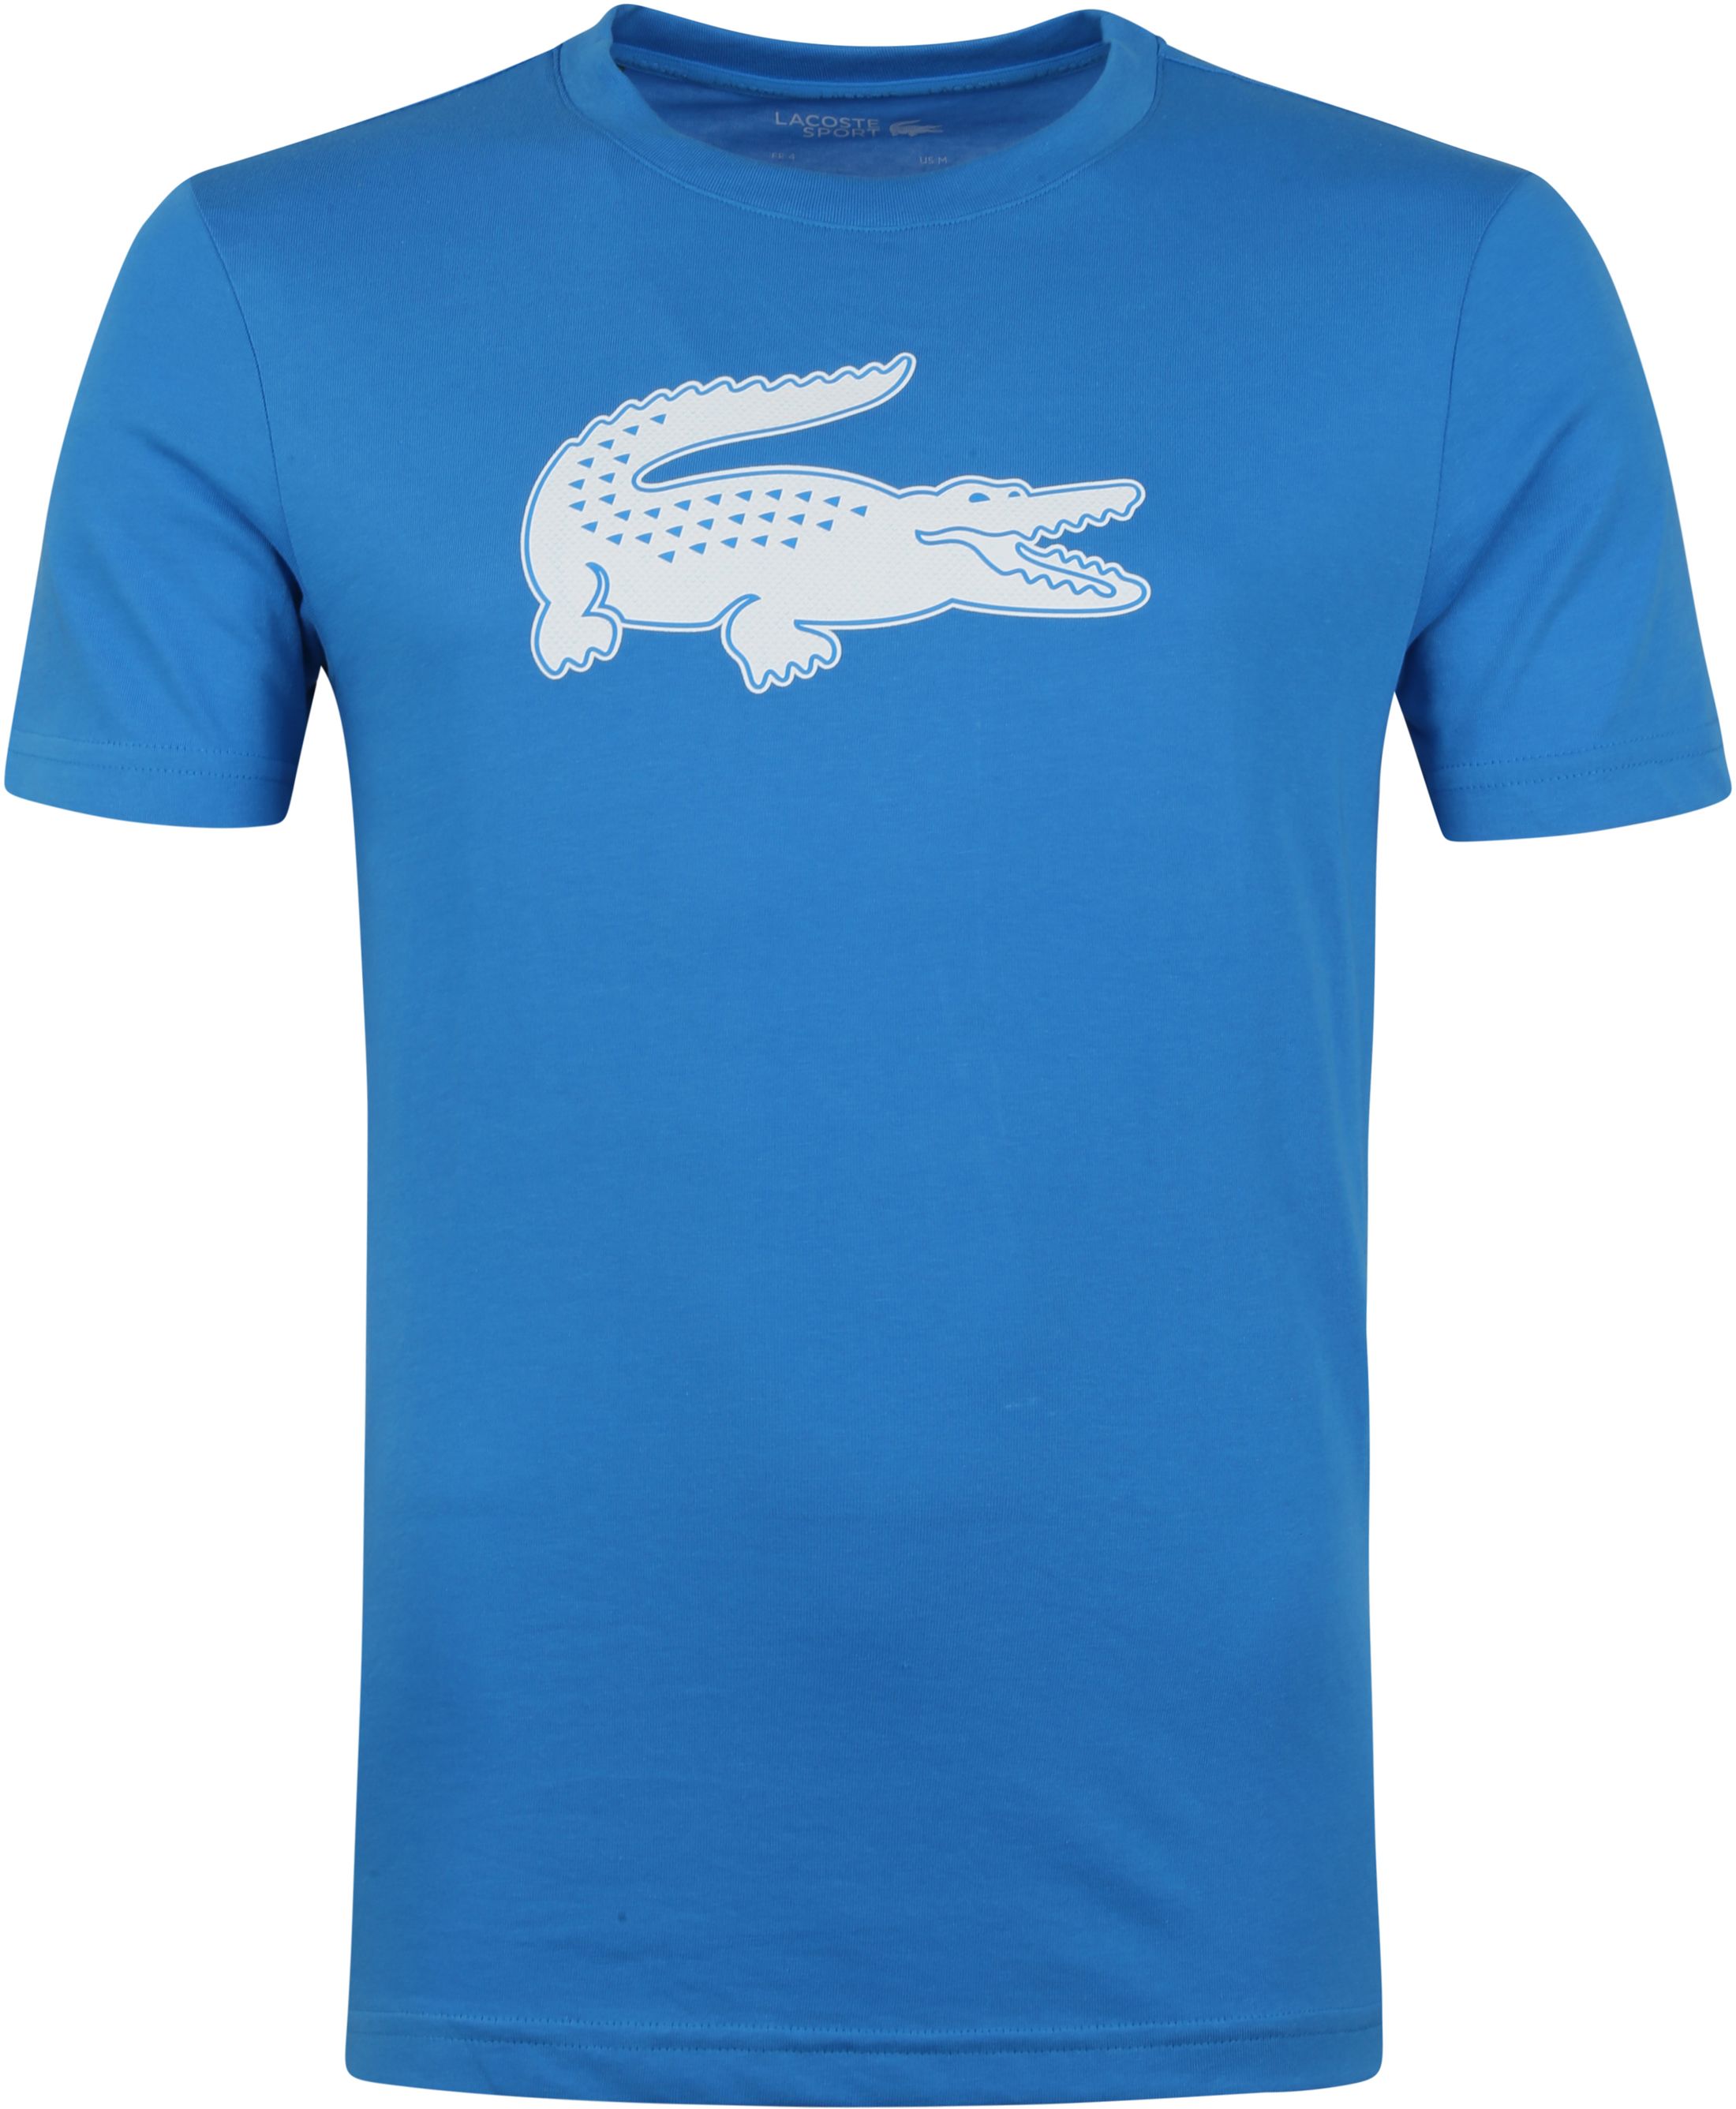 Lacoste Sport T-Shirt Jersey Blue size L